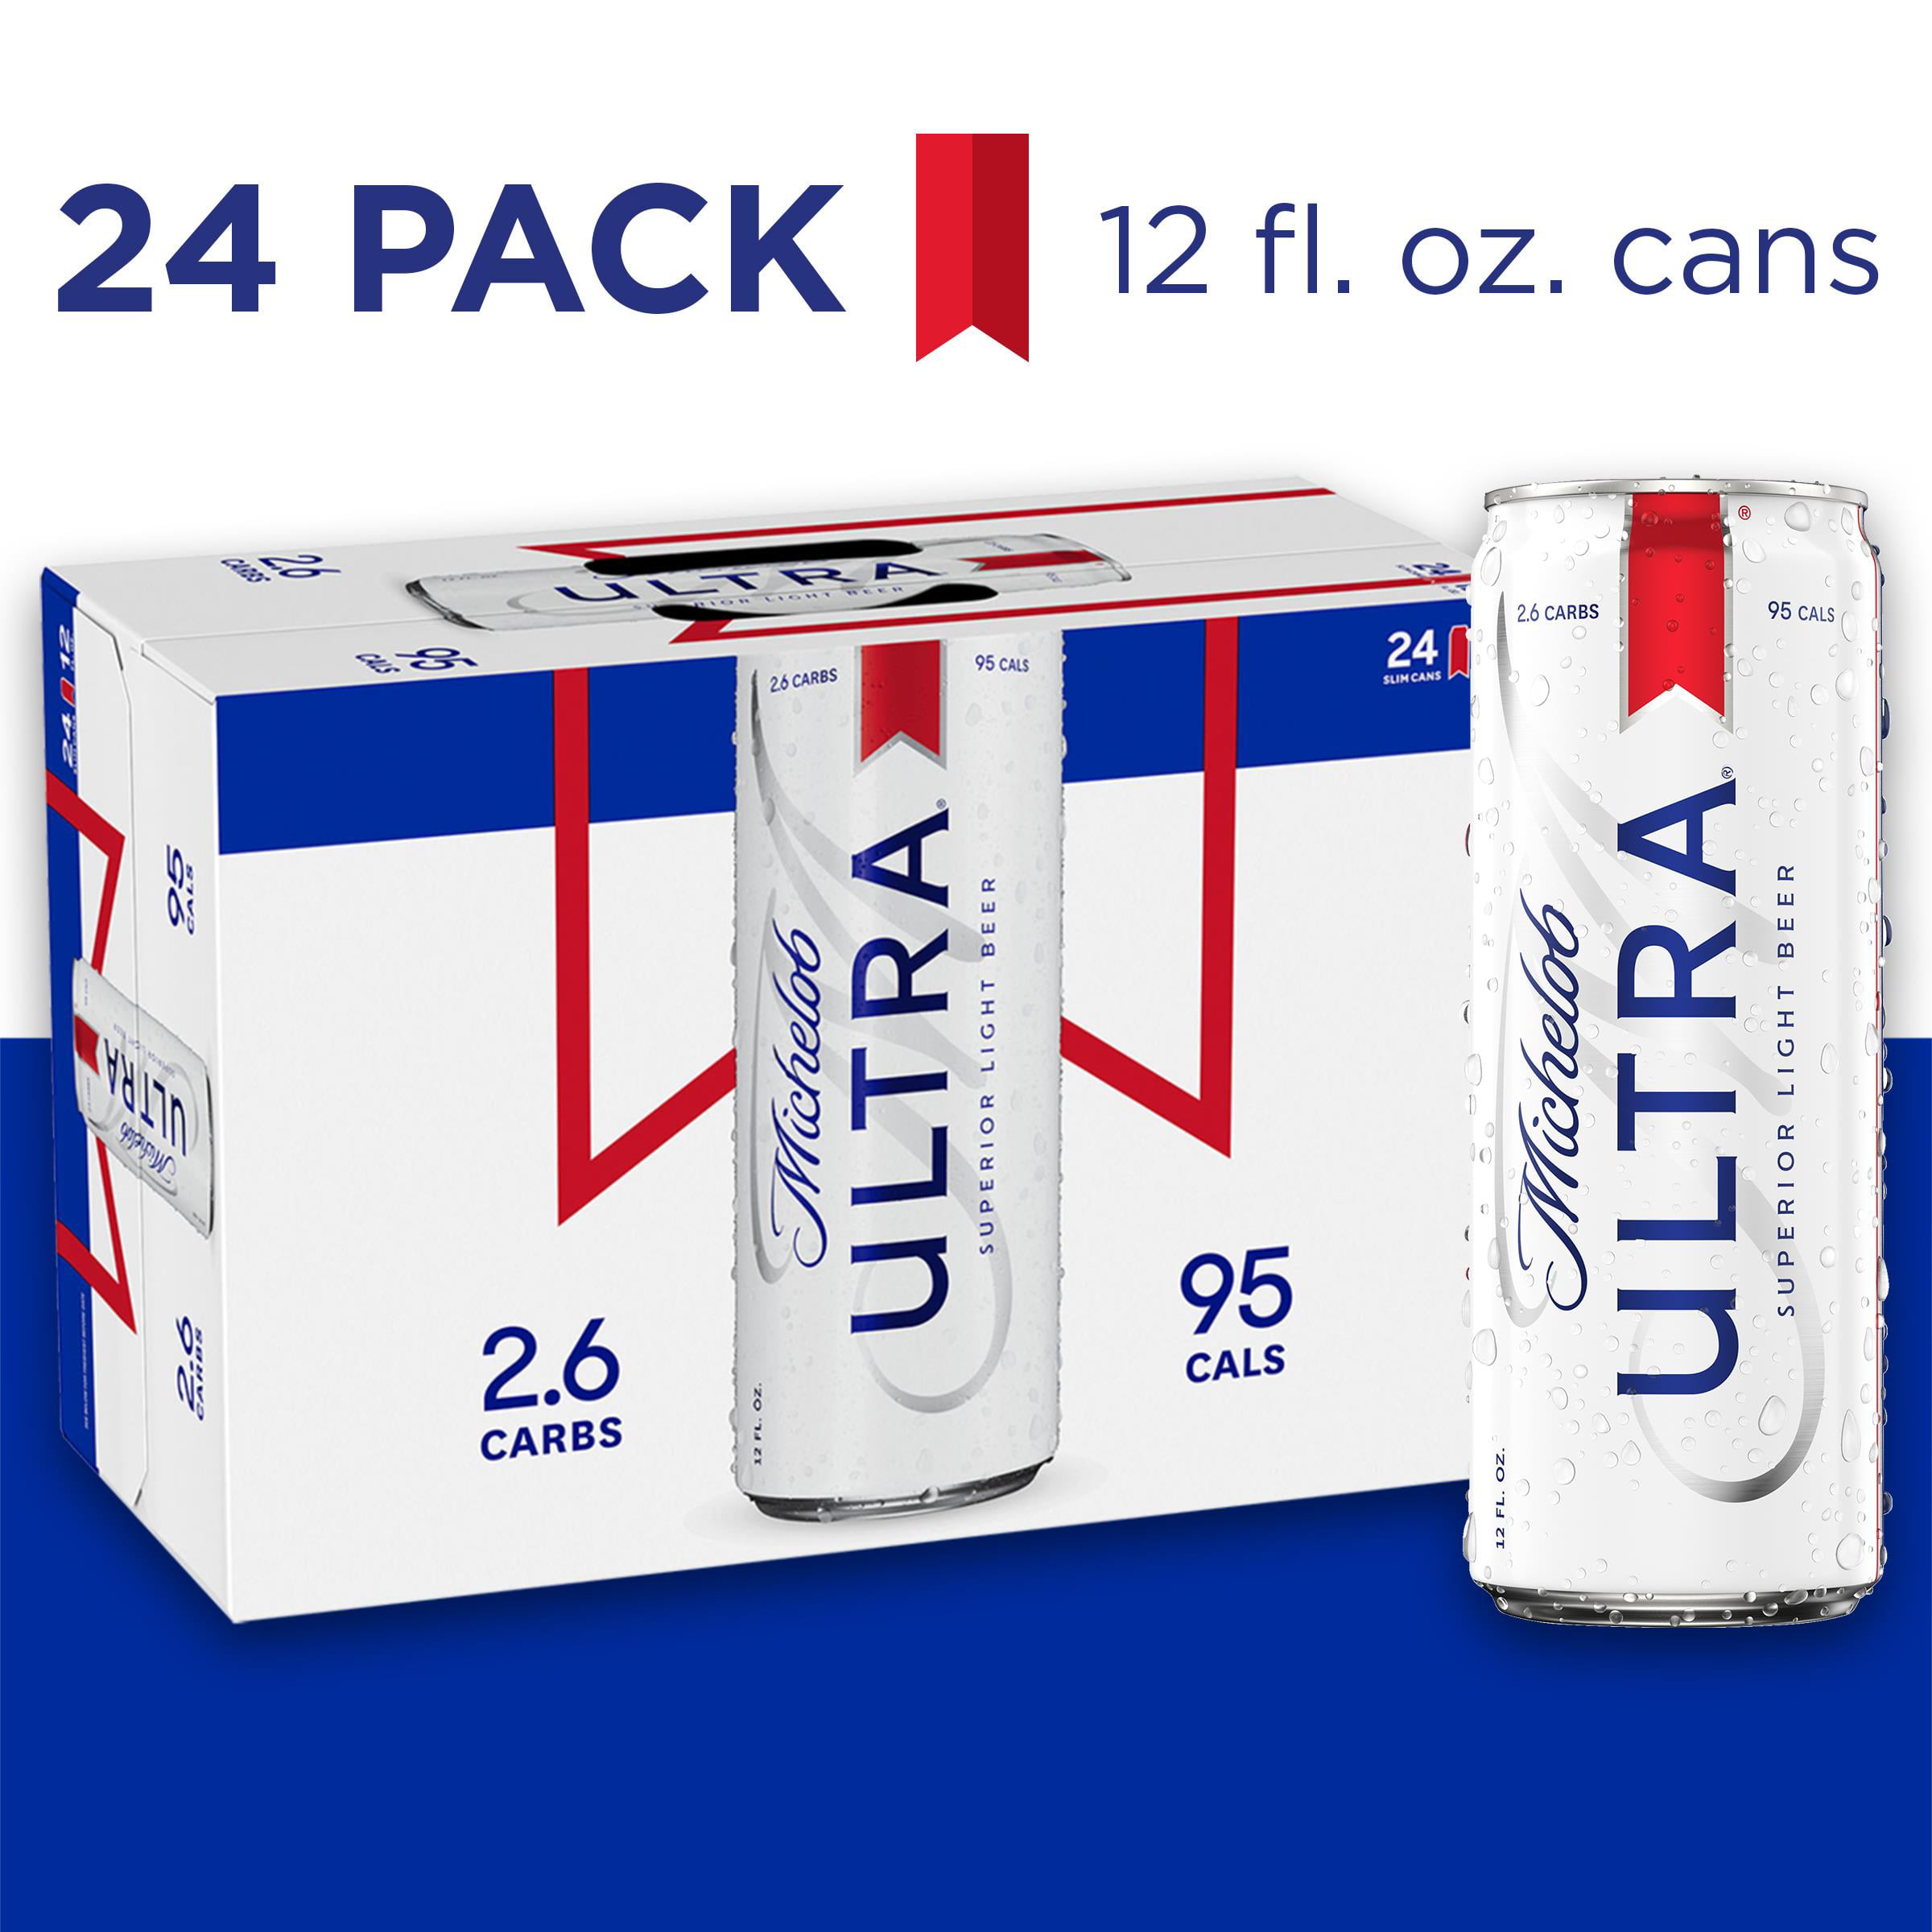 michelob-ultra-light-beer-24-pack-beer-12-fl-oz-cans-walmart